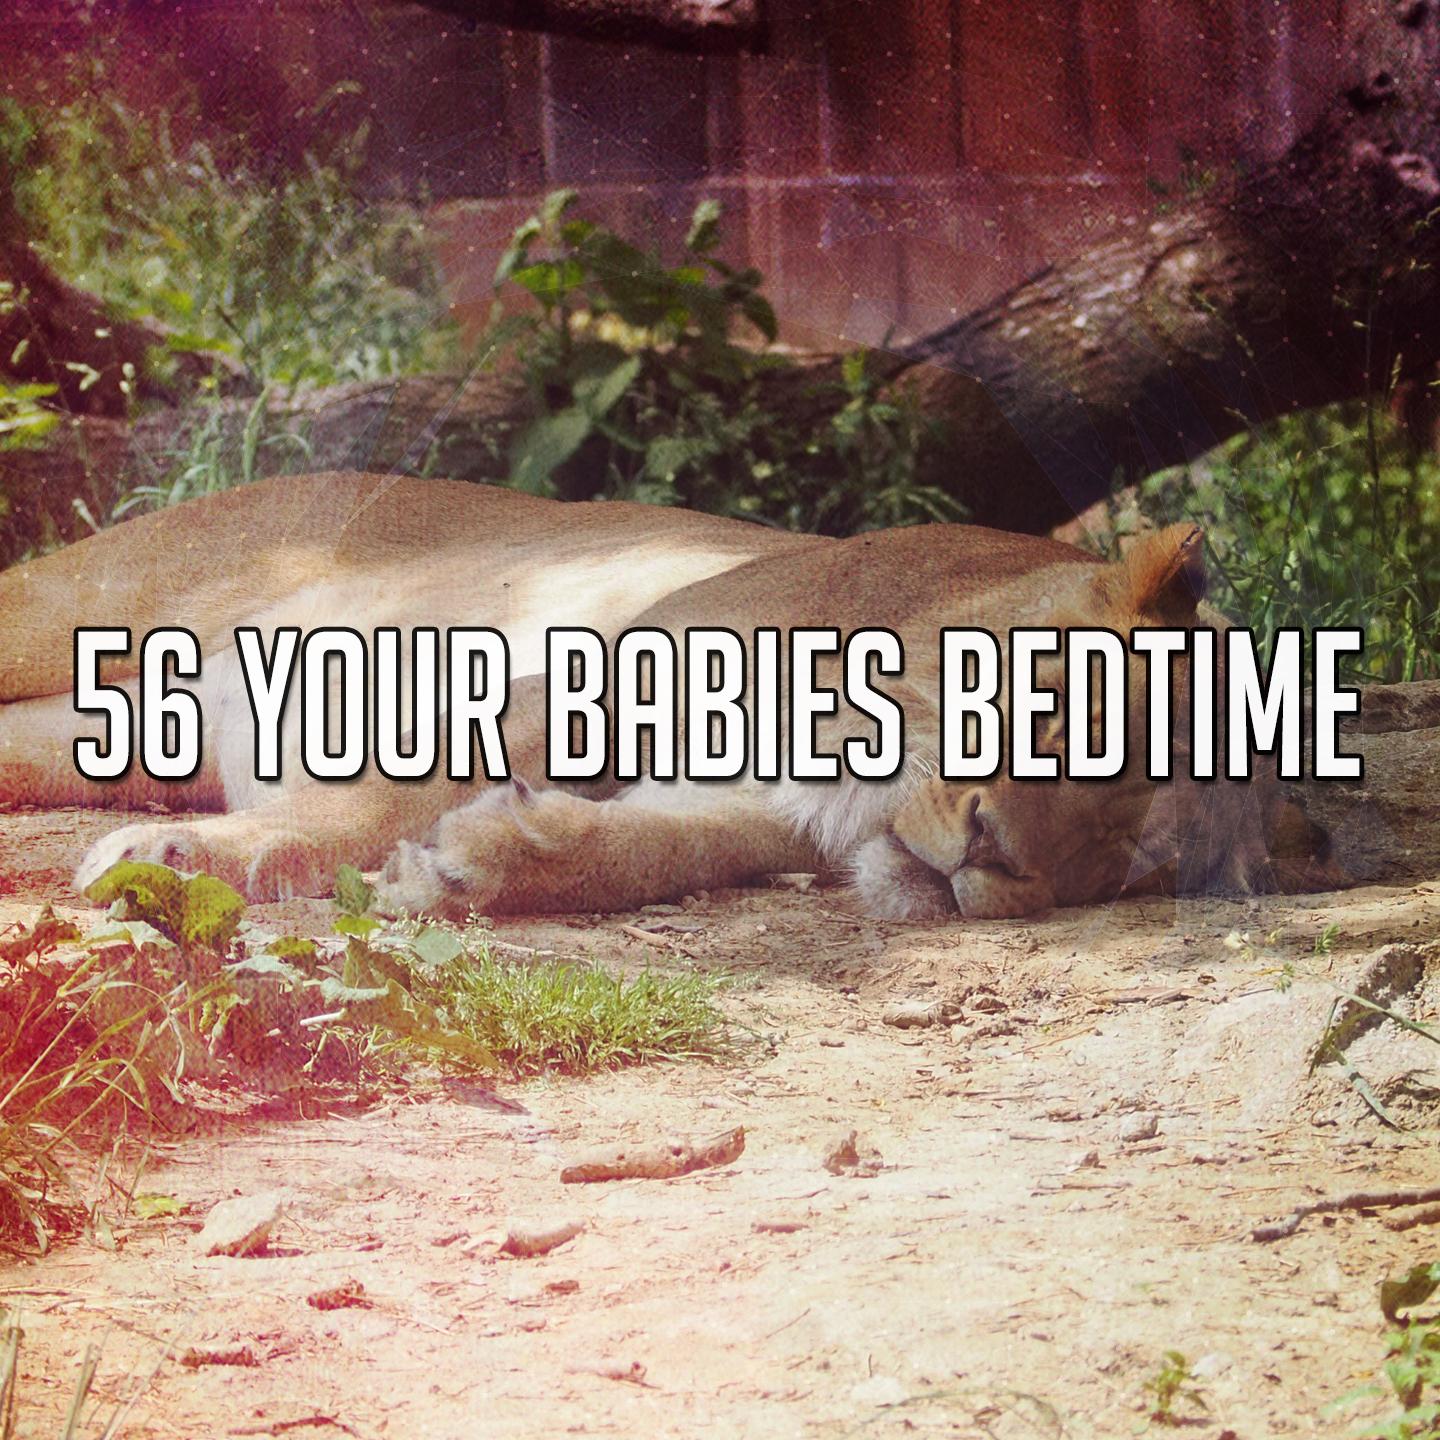 56 Your Babies Bedtime